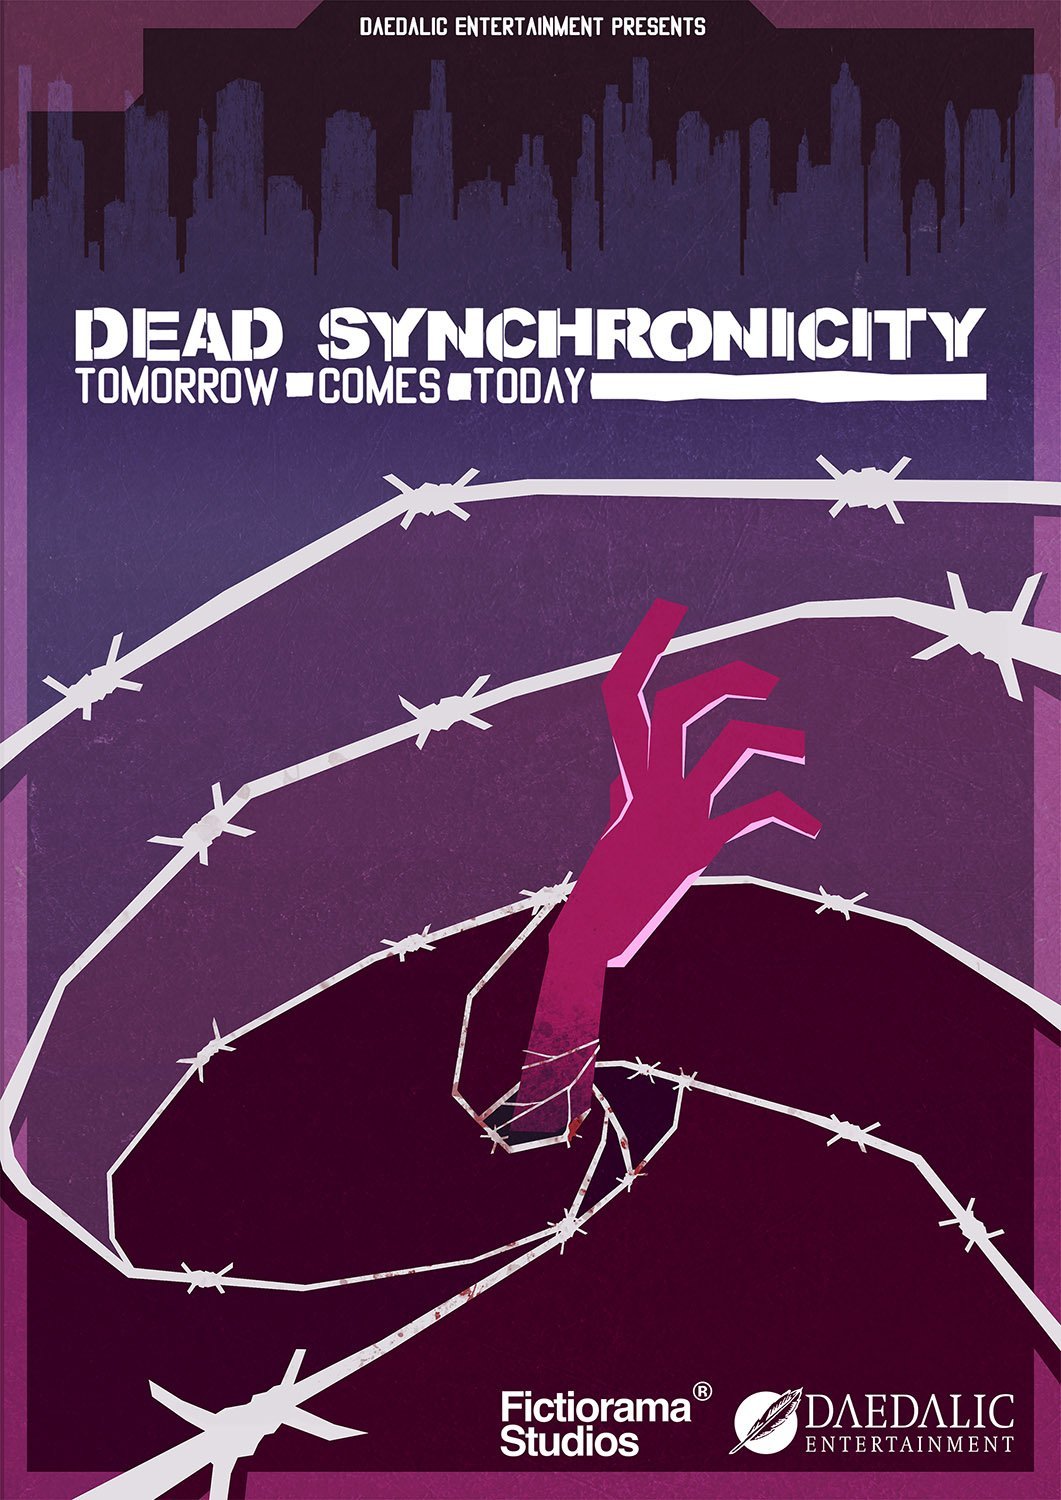 Dead Synchronicity: Tomorrow Comes Today v.1.0.10 [GOG] (2015) скачать торрент Лицензия